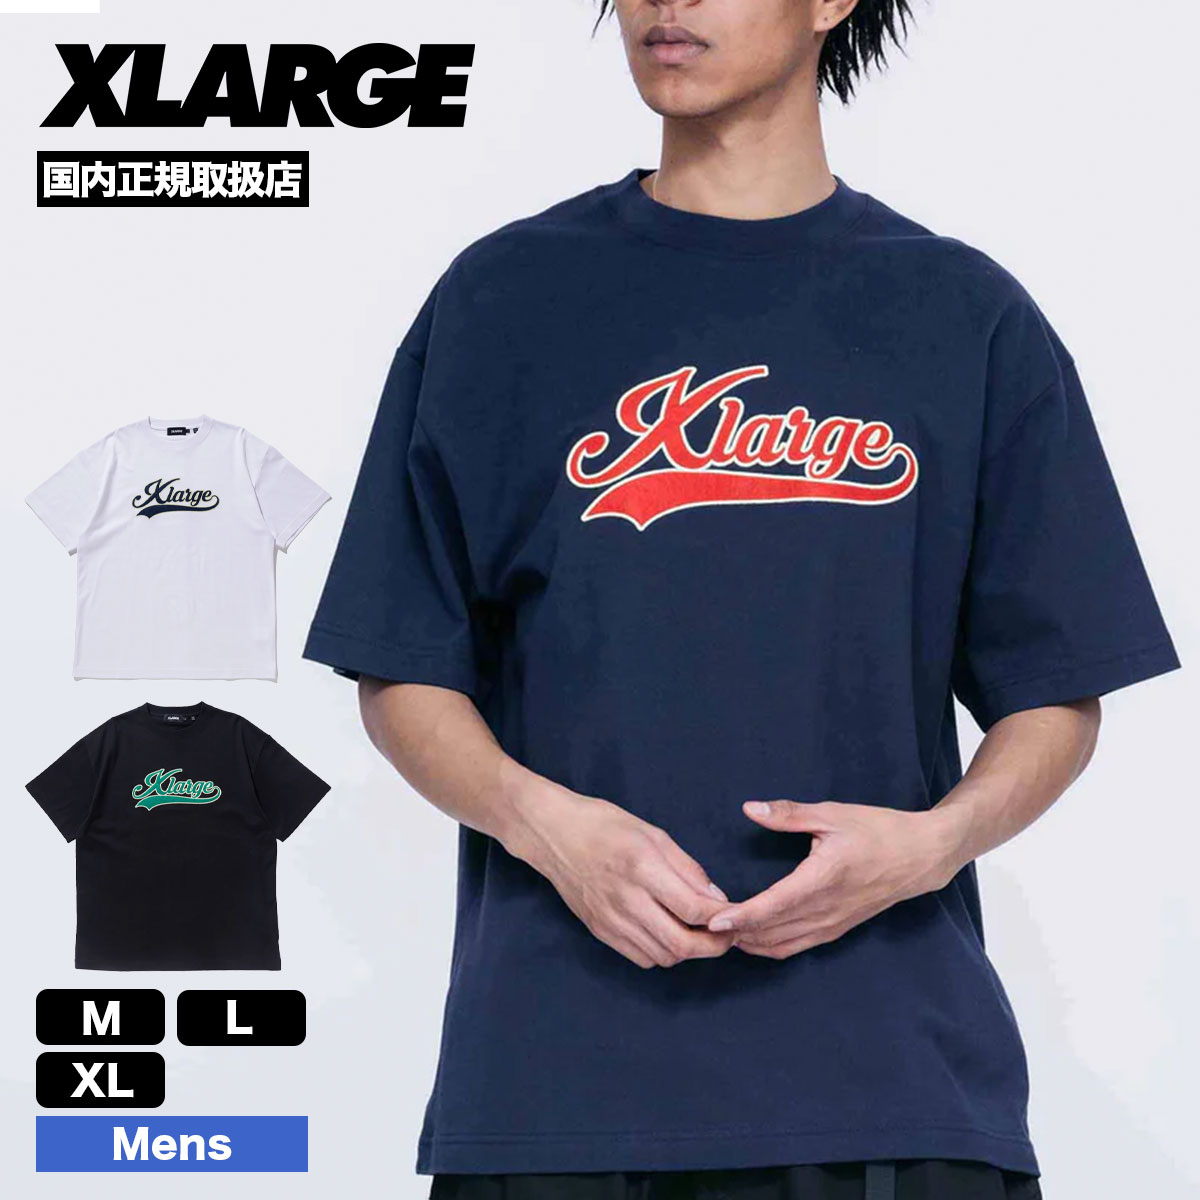 L【送料込・新品】エクストララージ XLARGE Tシャツ